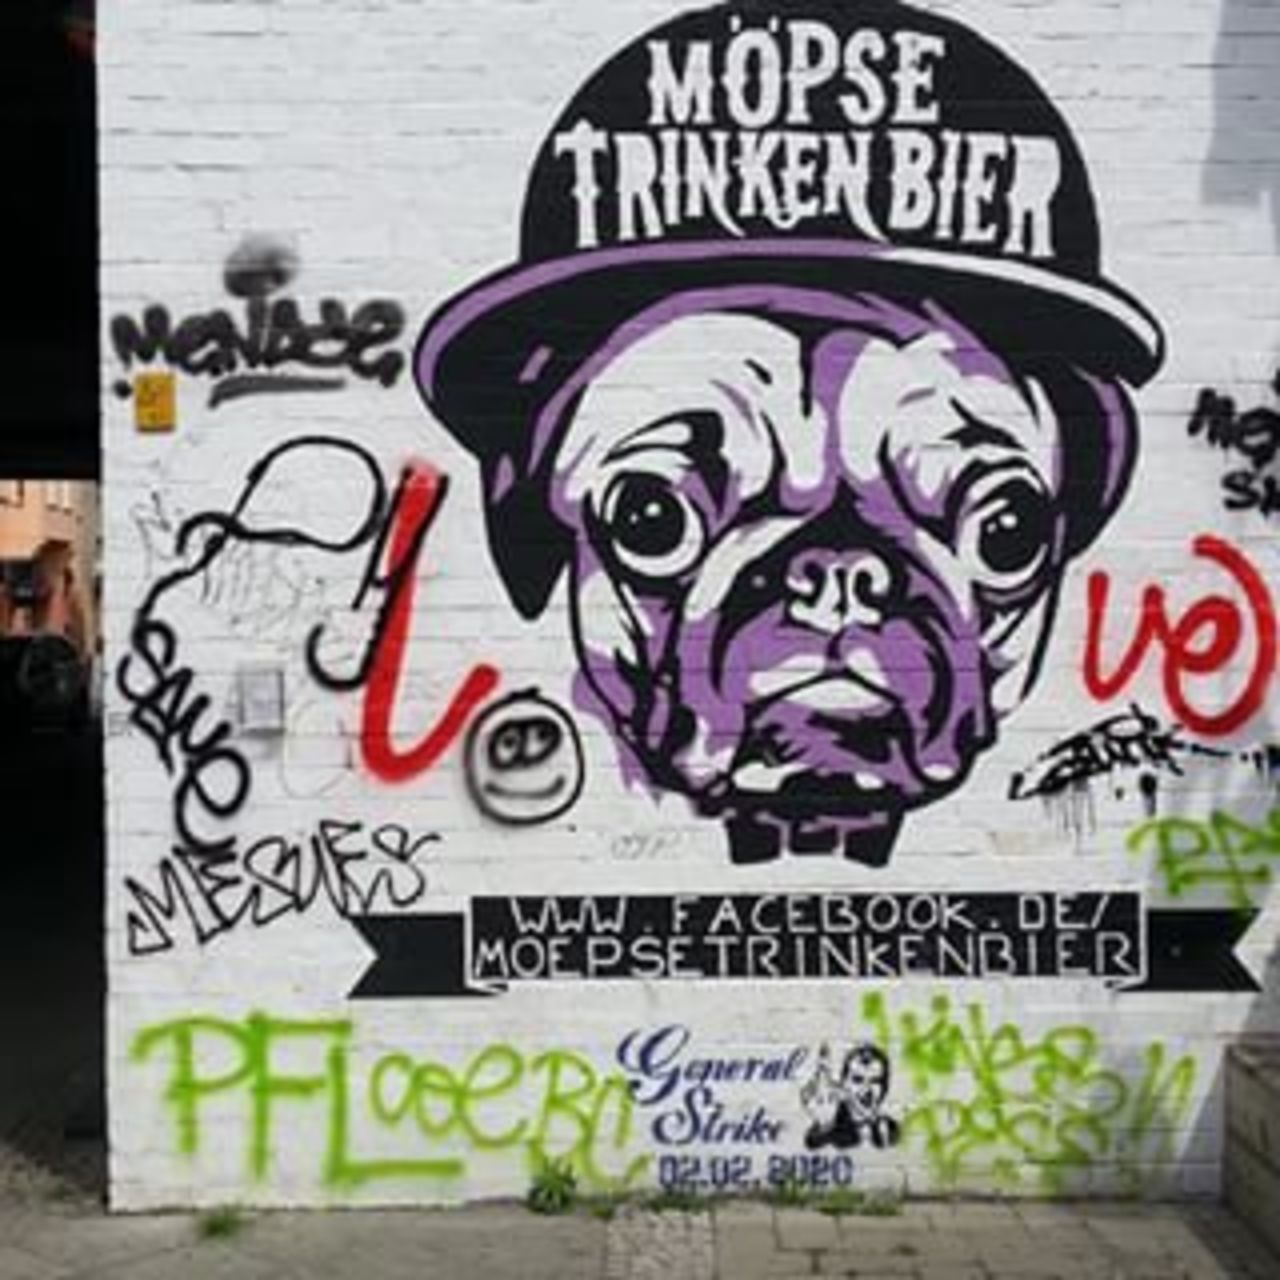 #berlin #art #graffiti #pug #Design #wallart http://www.findelight.net/puggie_detail.html?id=983289928059890117_1520458753 http://t.co/ehhpaGNSCQ